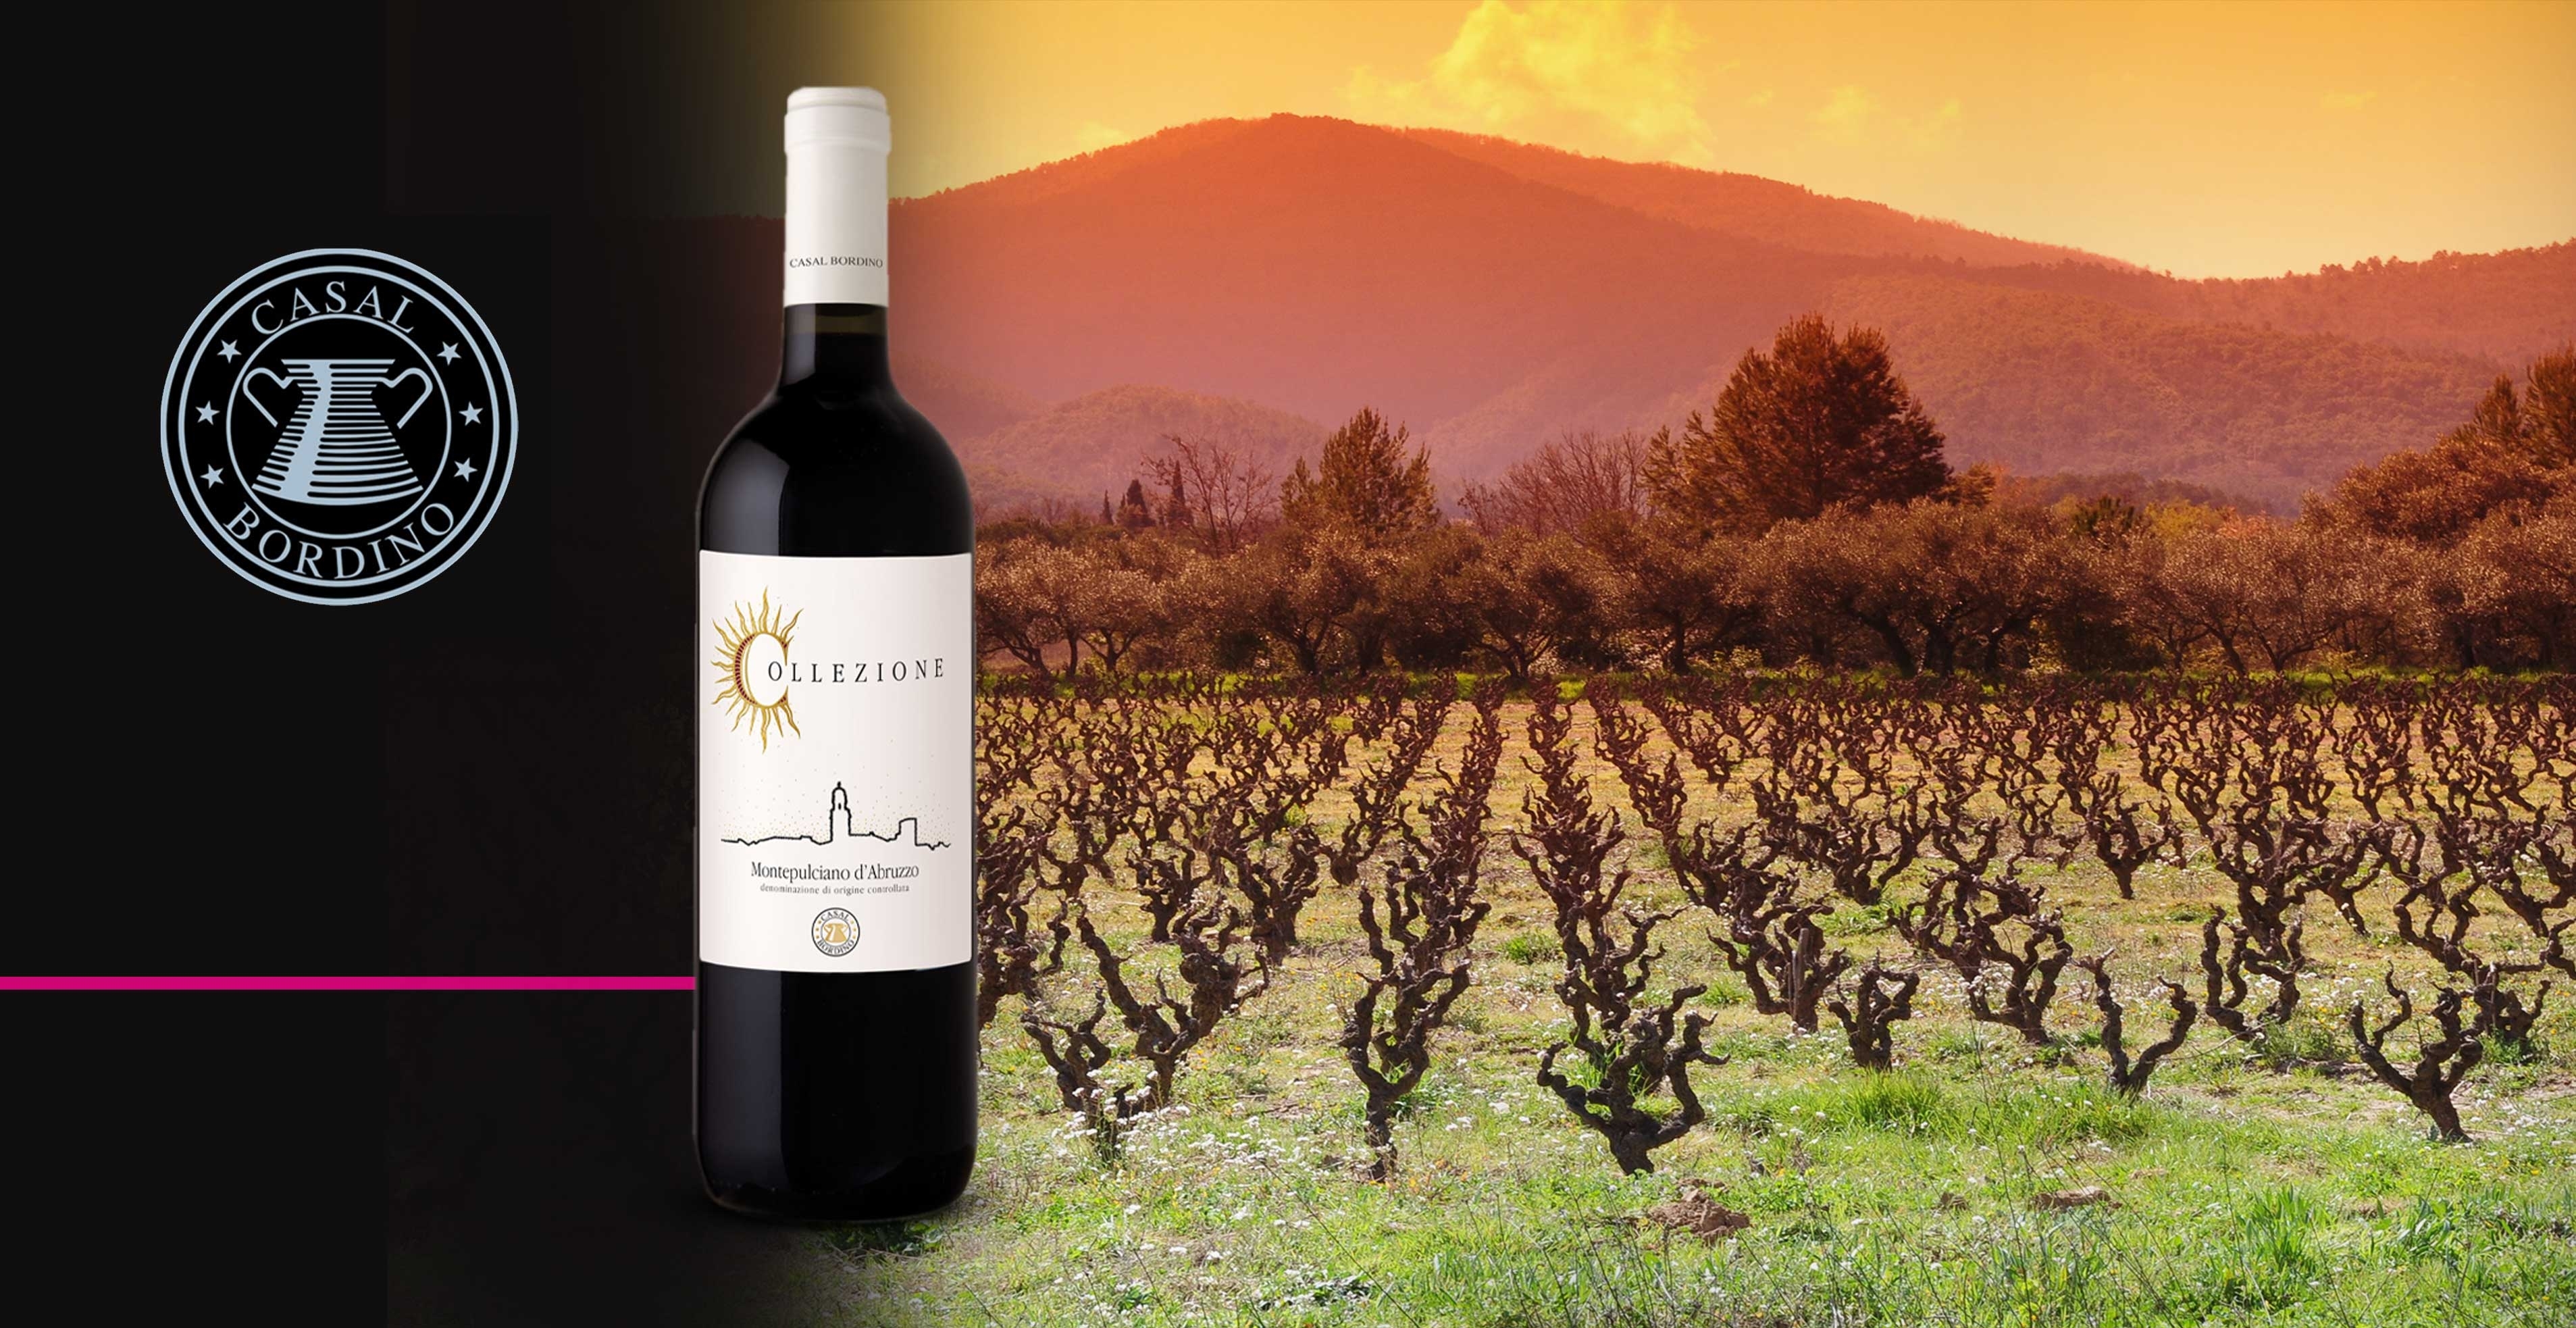 Rode wijn - CasalBordino - Montepulciano d'Abruzzo Magnum